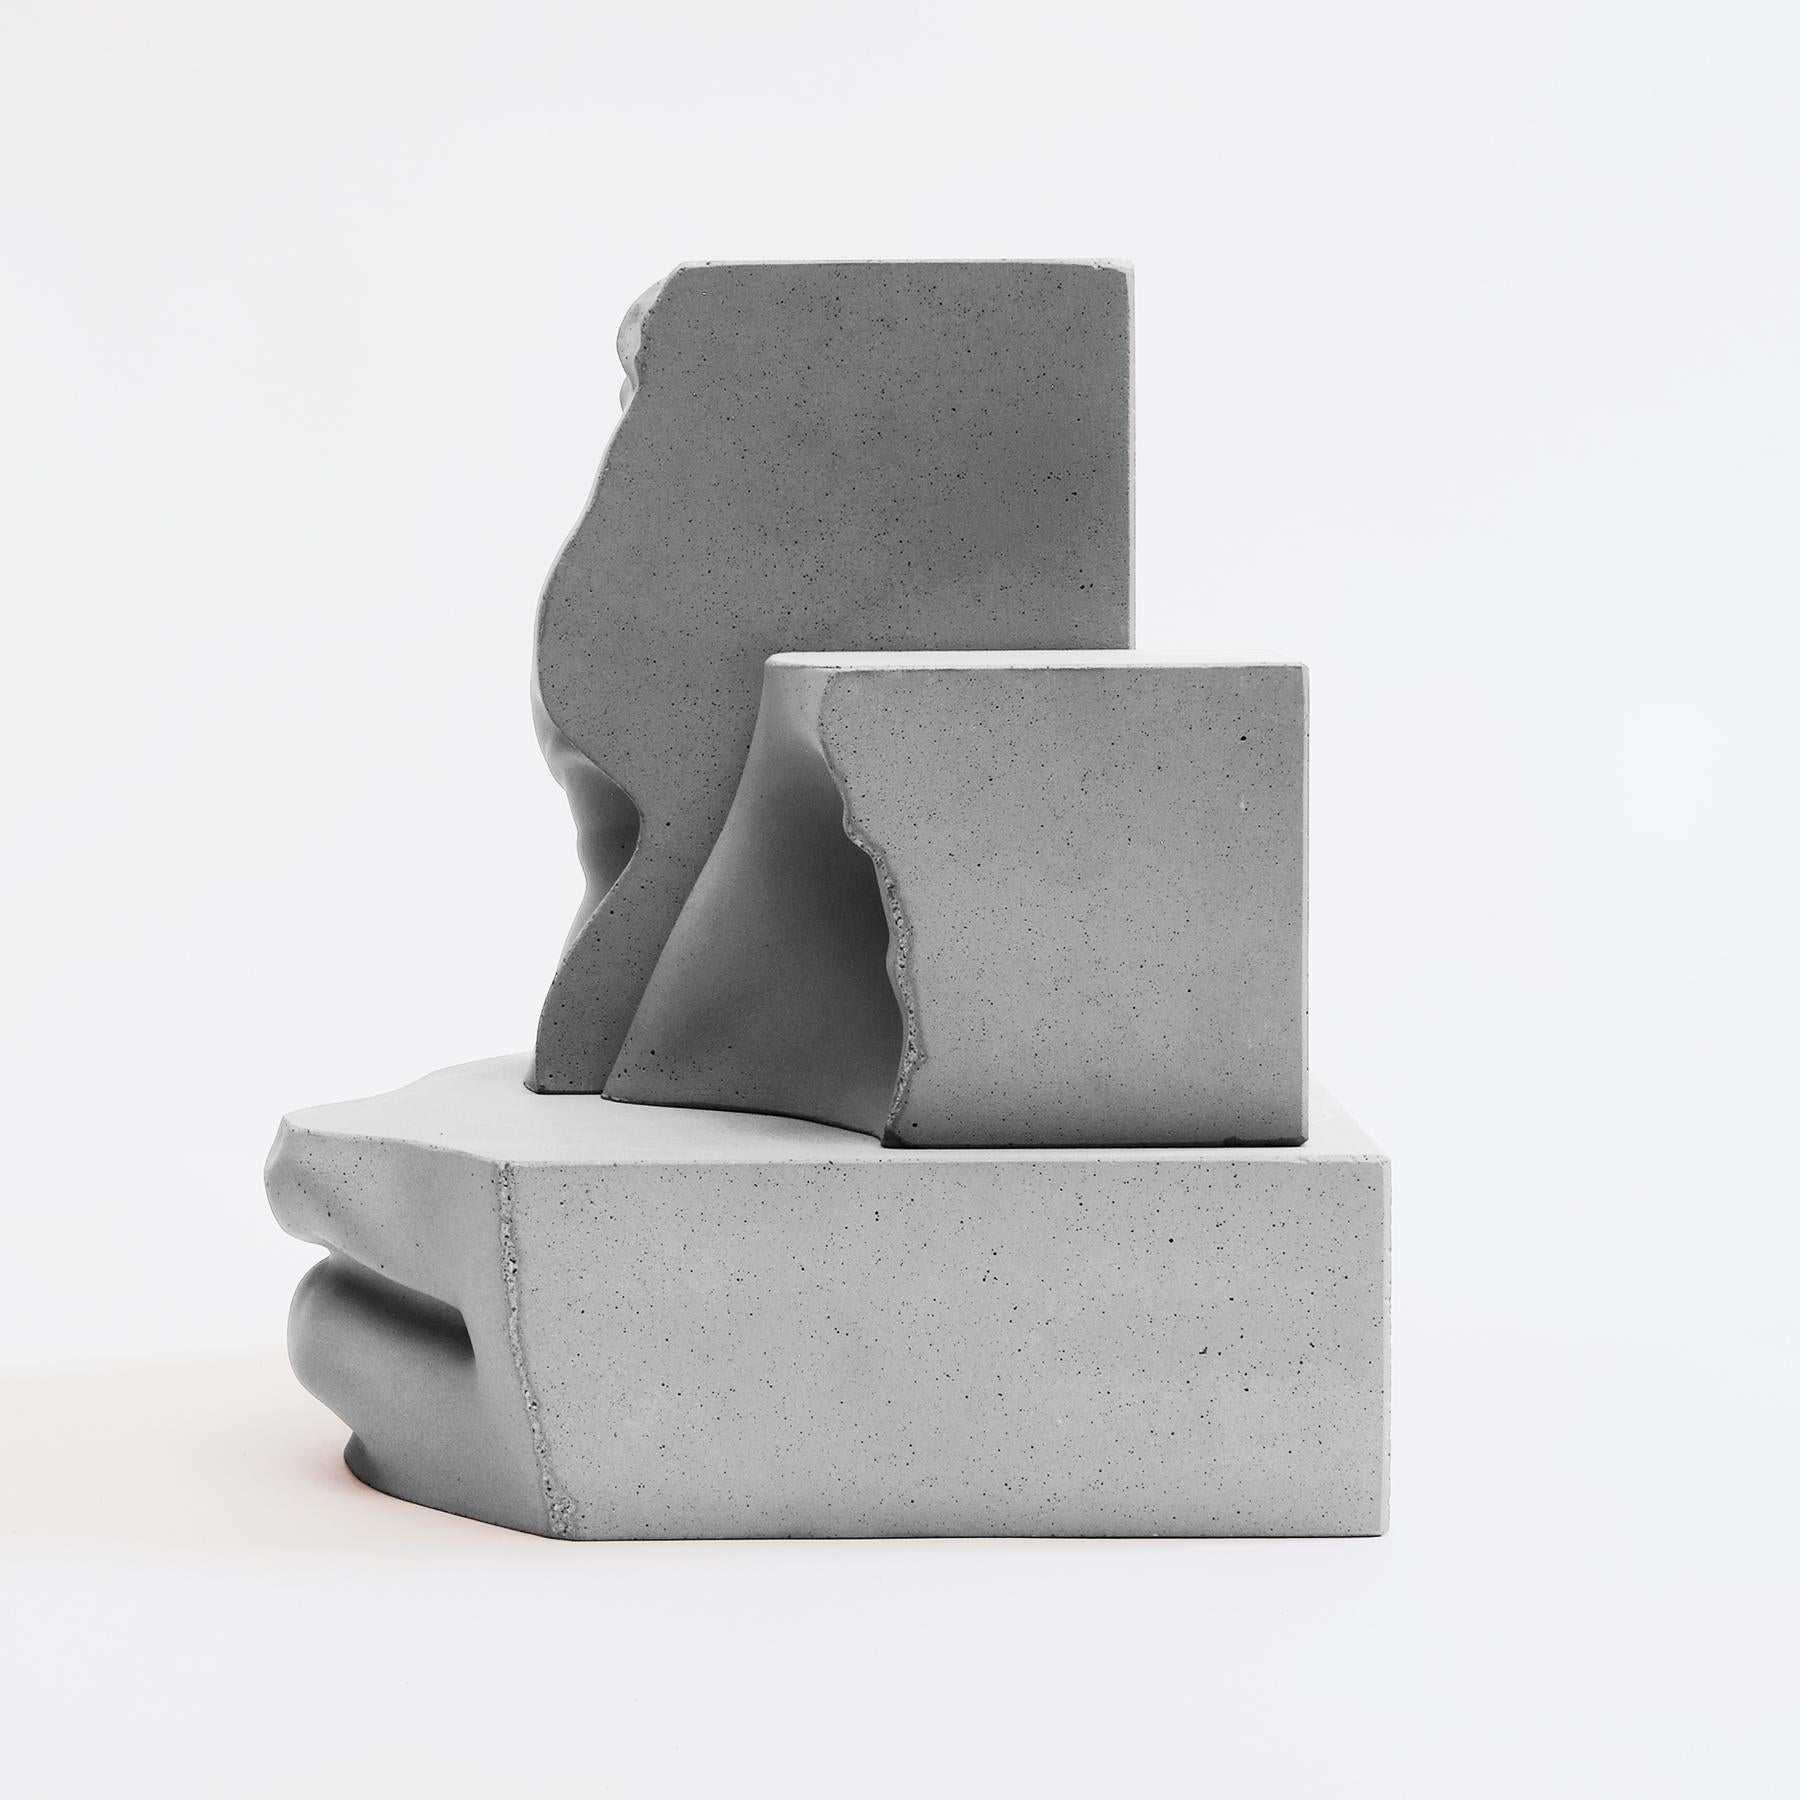 Contemporary Hermes - Natural Concrete - Design Sculpture Paolo Giordano Classic Cement Cast For Sale